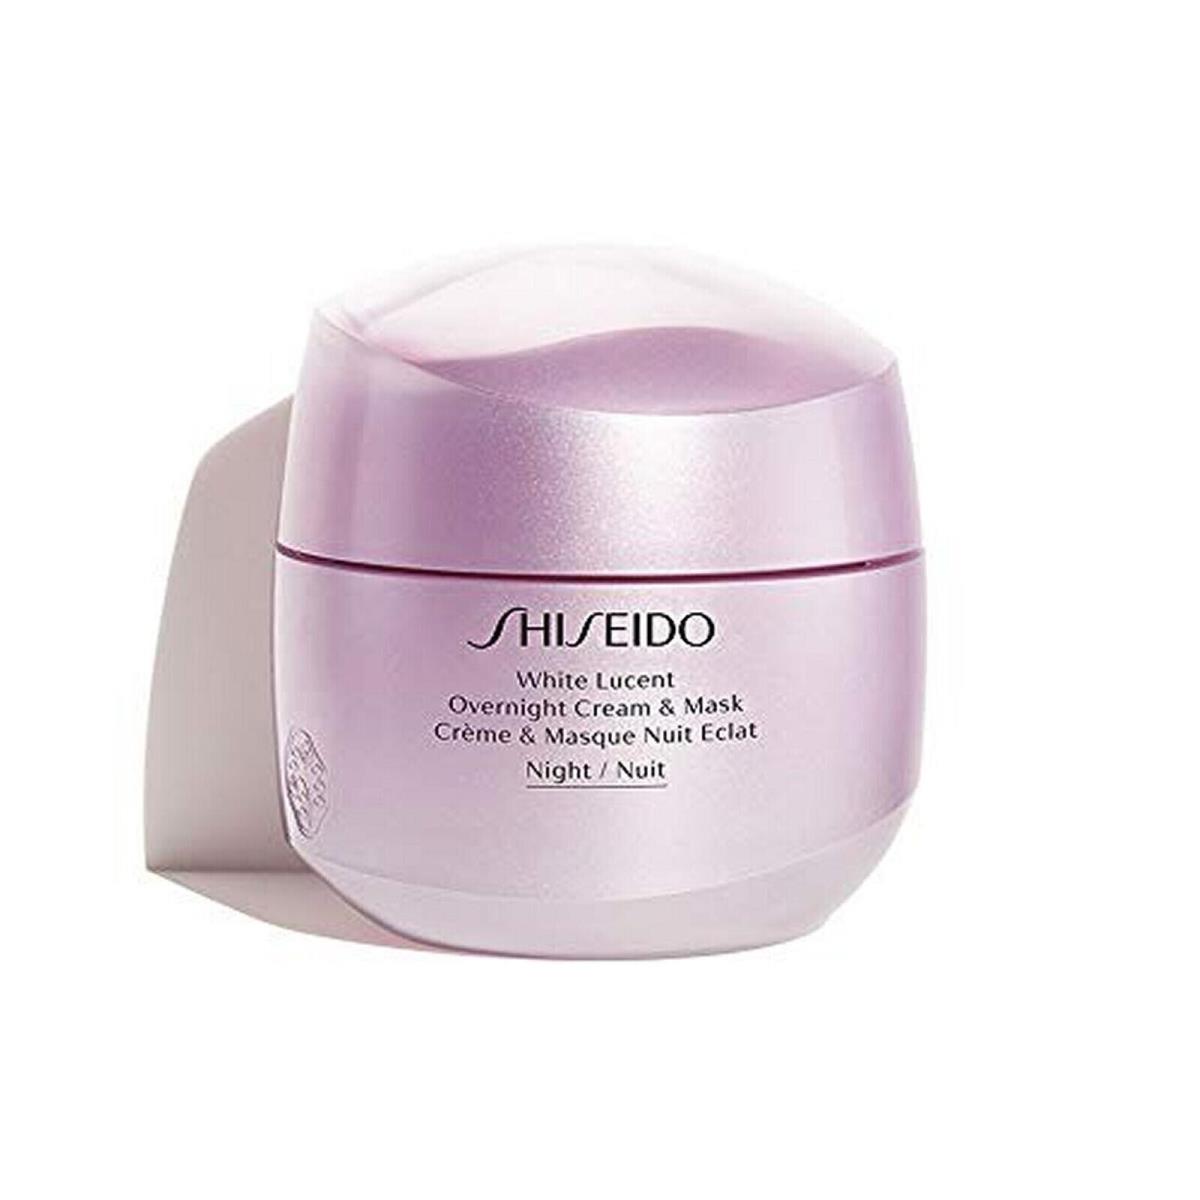 Shiseido White Lucent Overnight Cream Mask 2.6 oz - 75ml